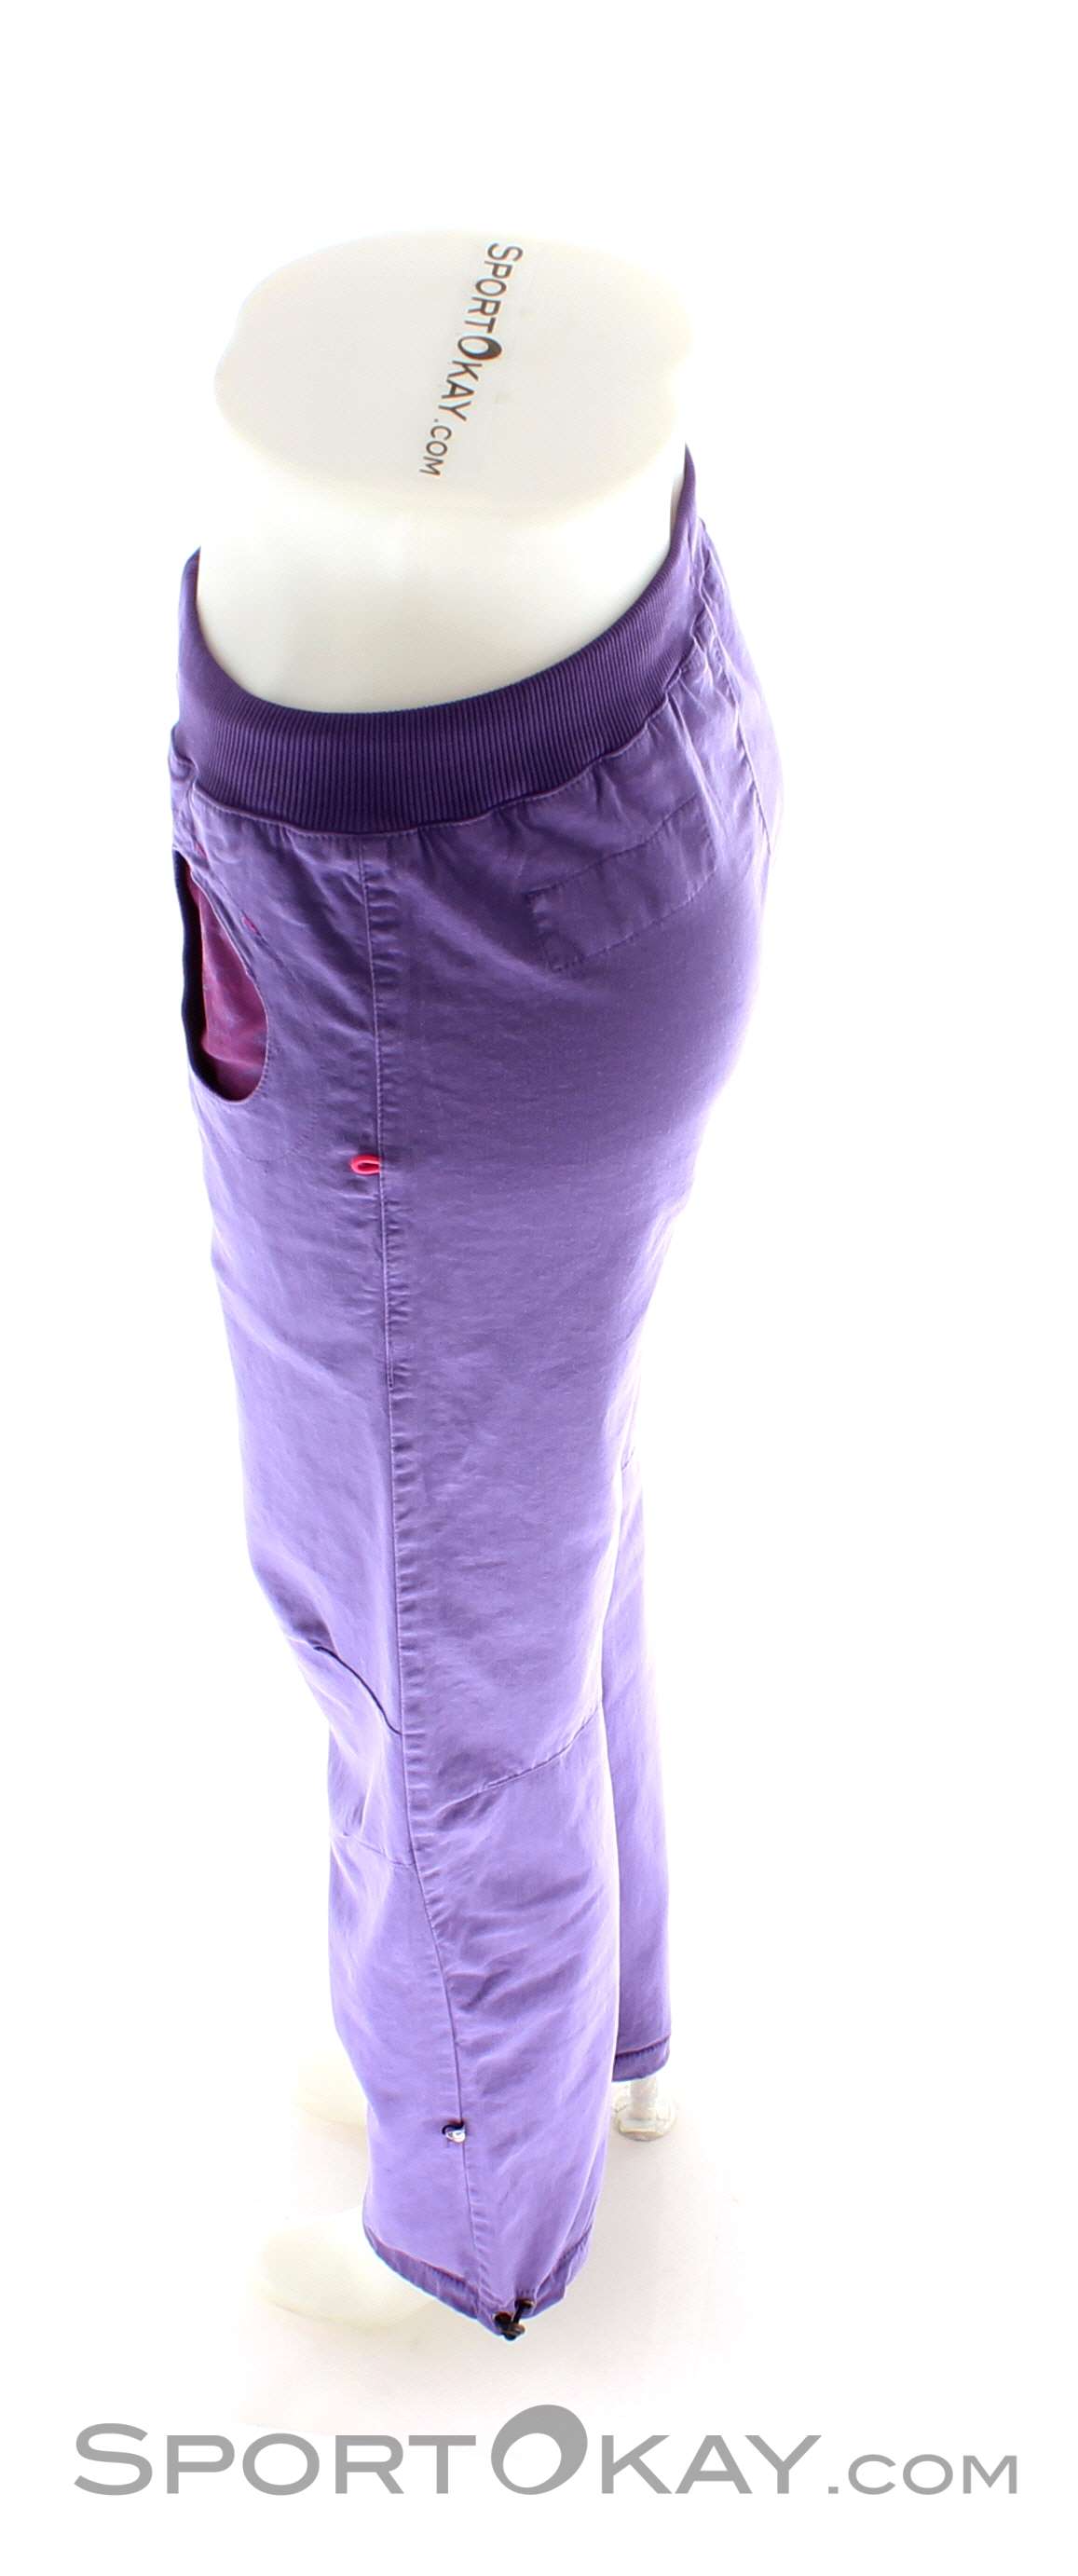 E9 Pulce Womens Climbing Pants - Pants - Climbing Clothing